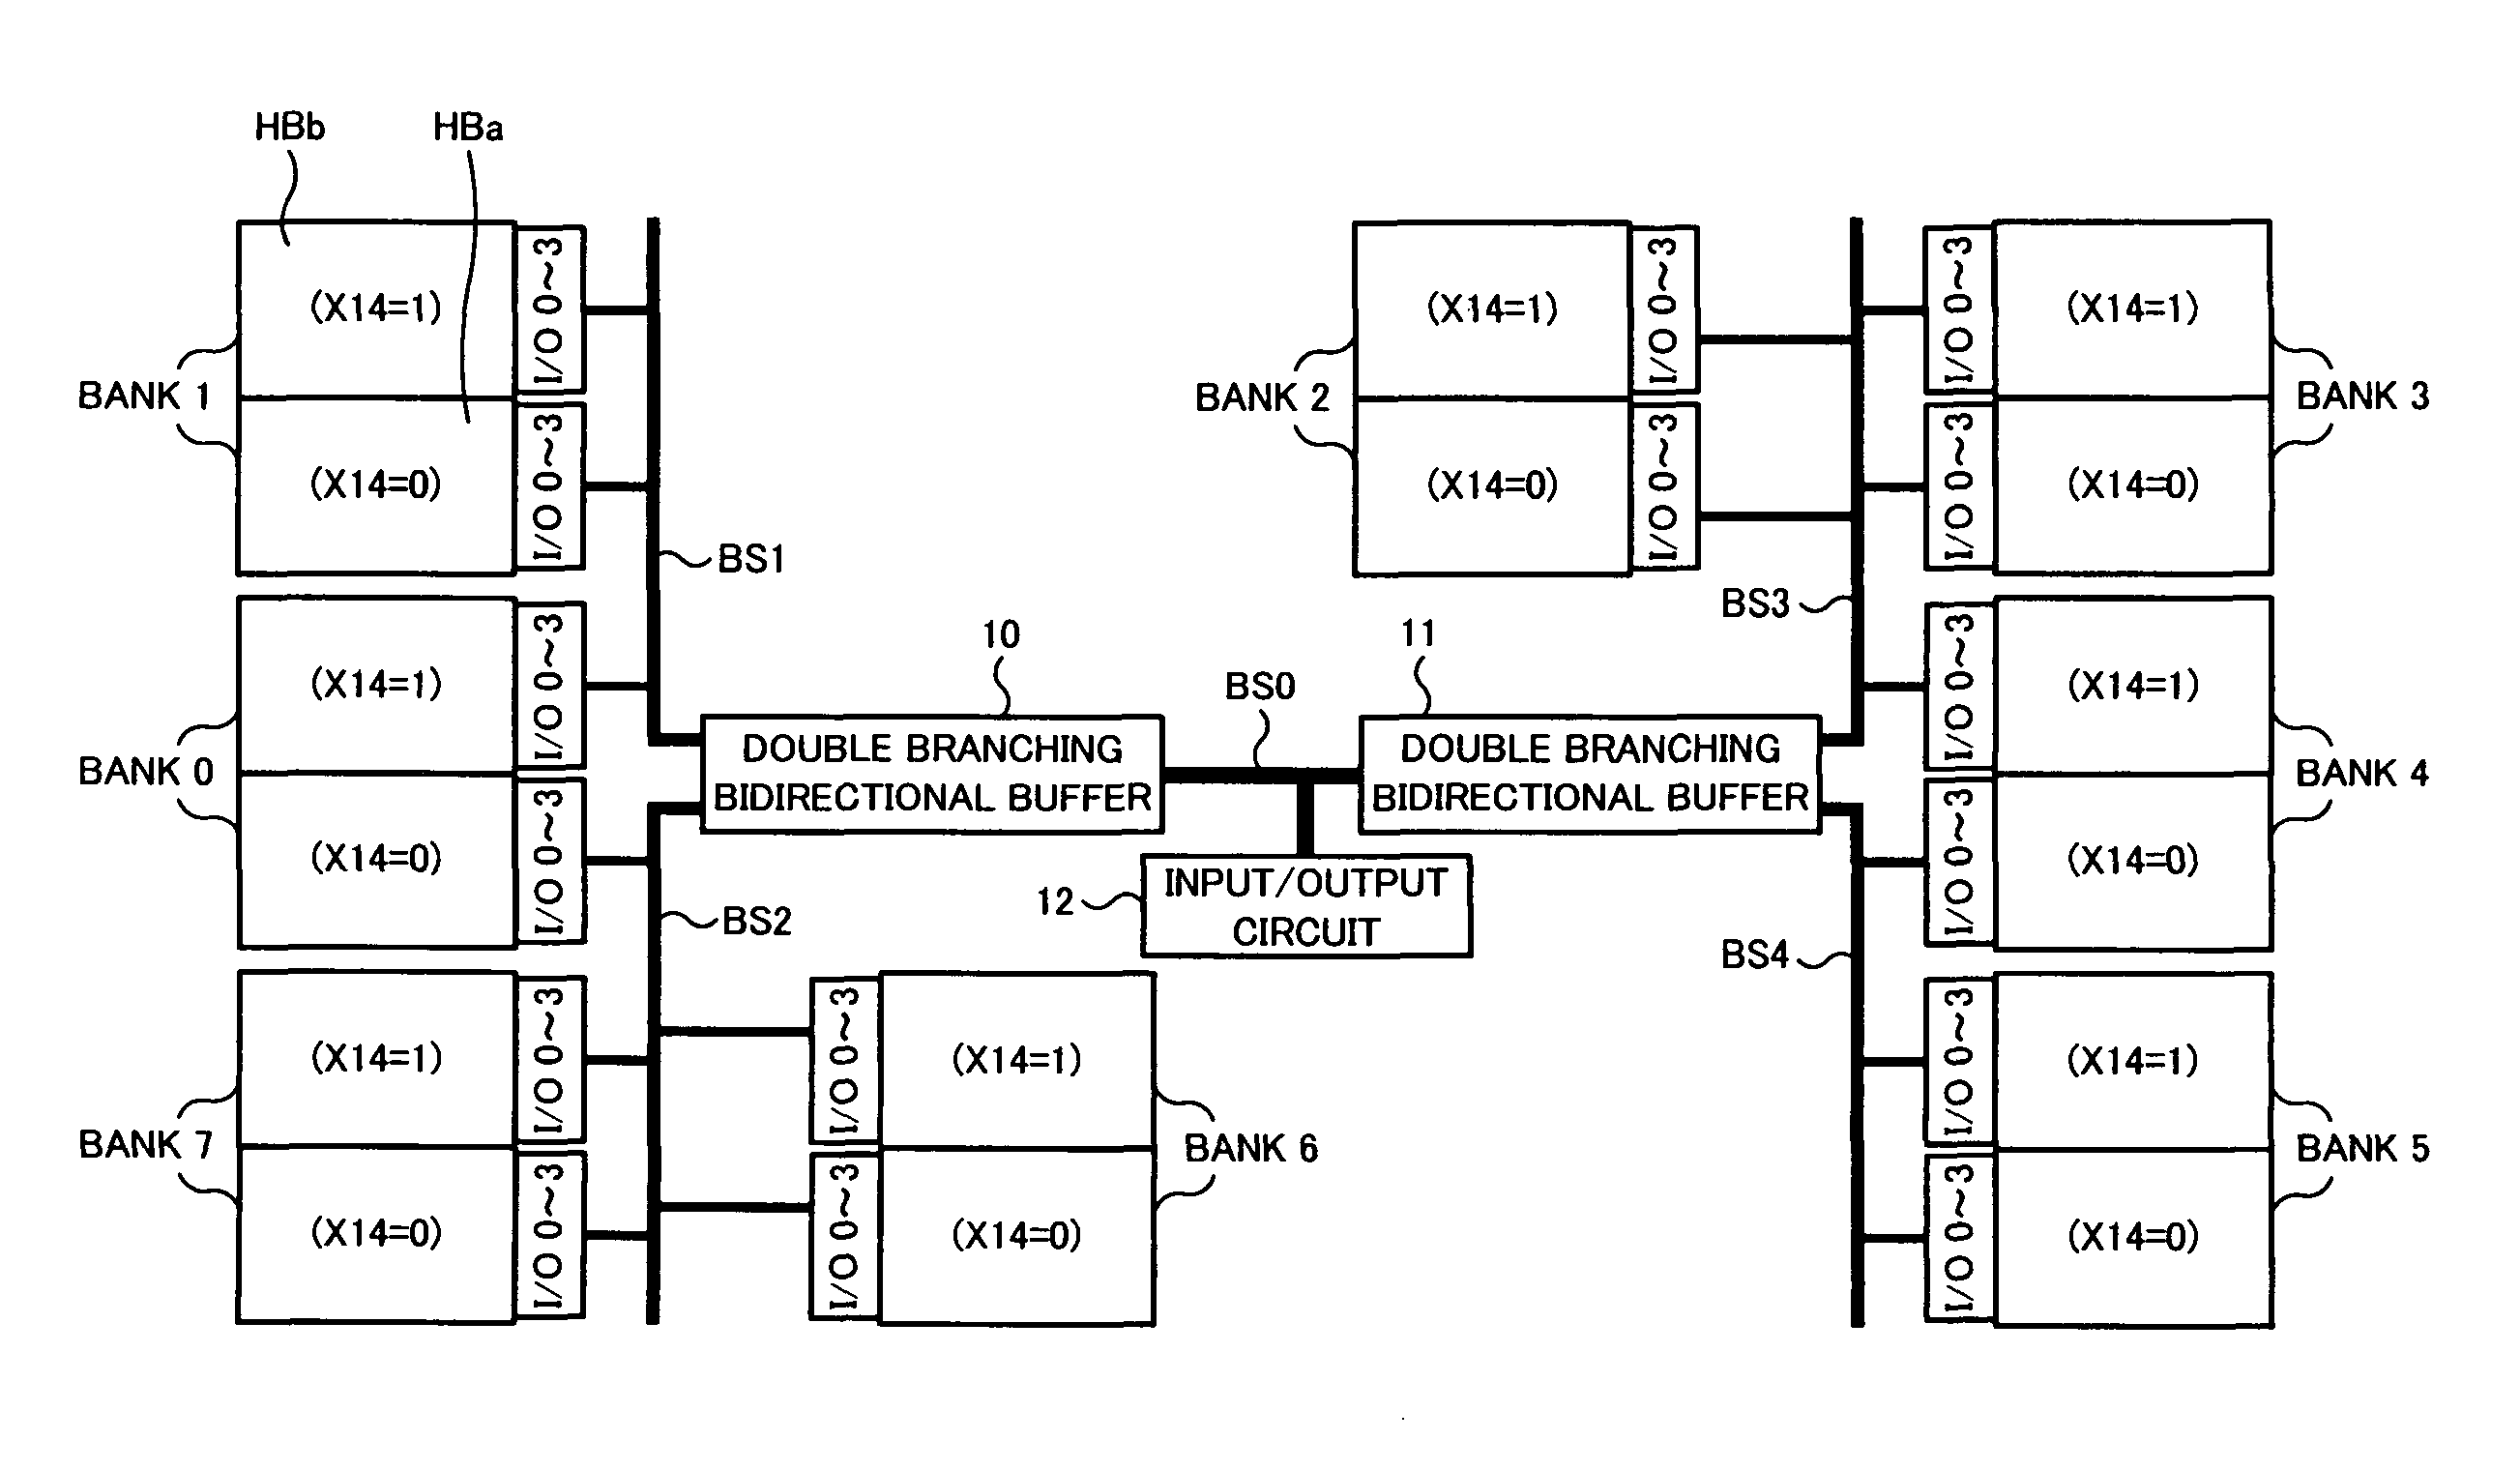 Semiconductor memory device having a double branching bidirectional buffer